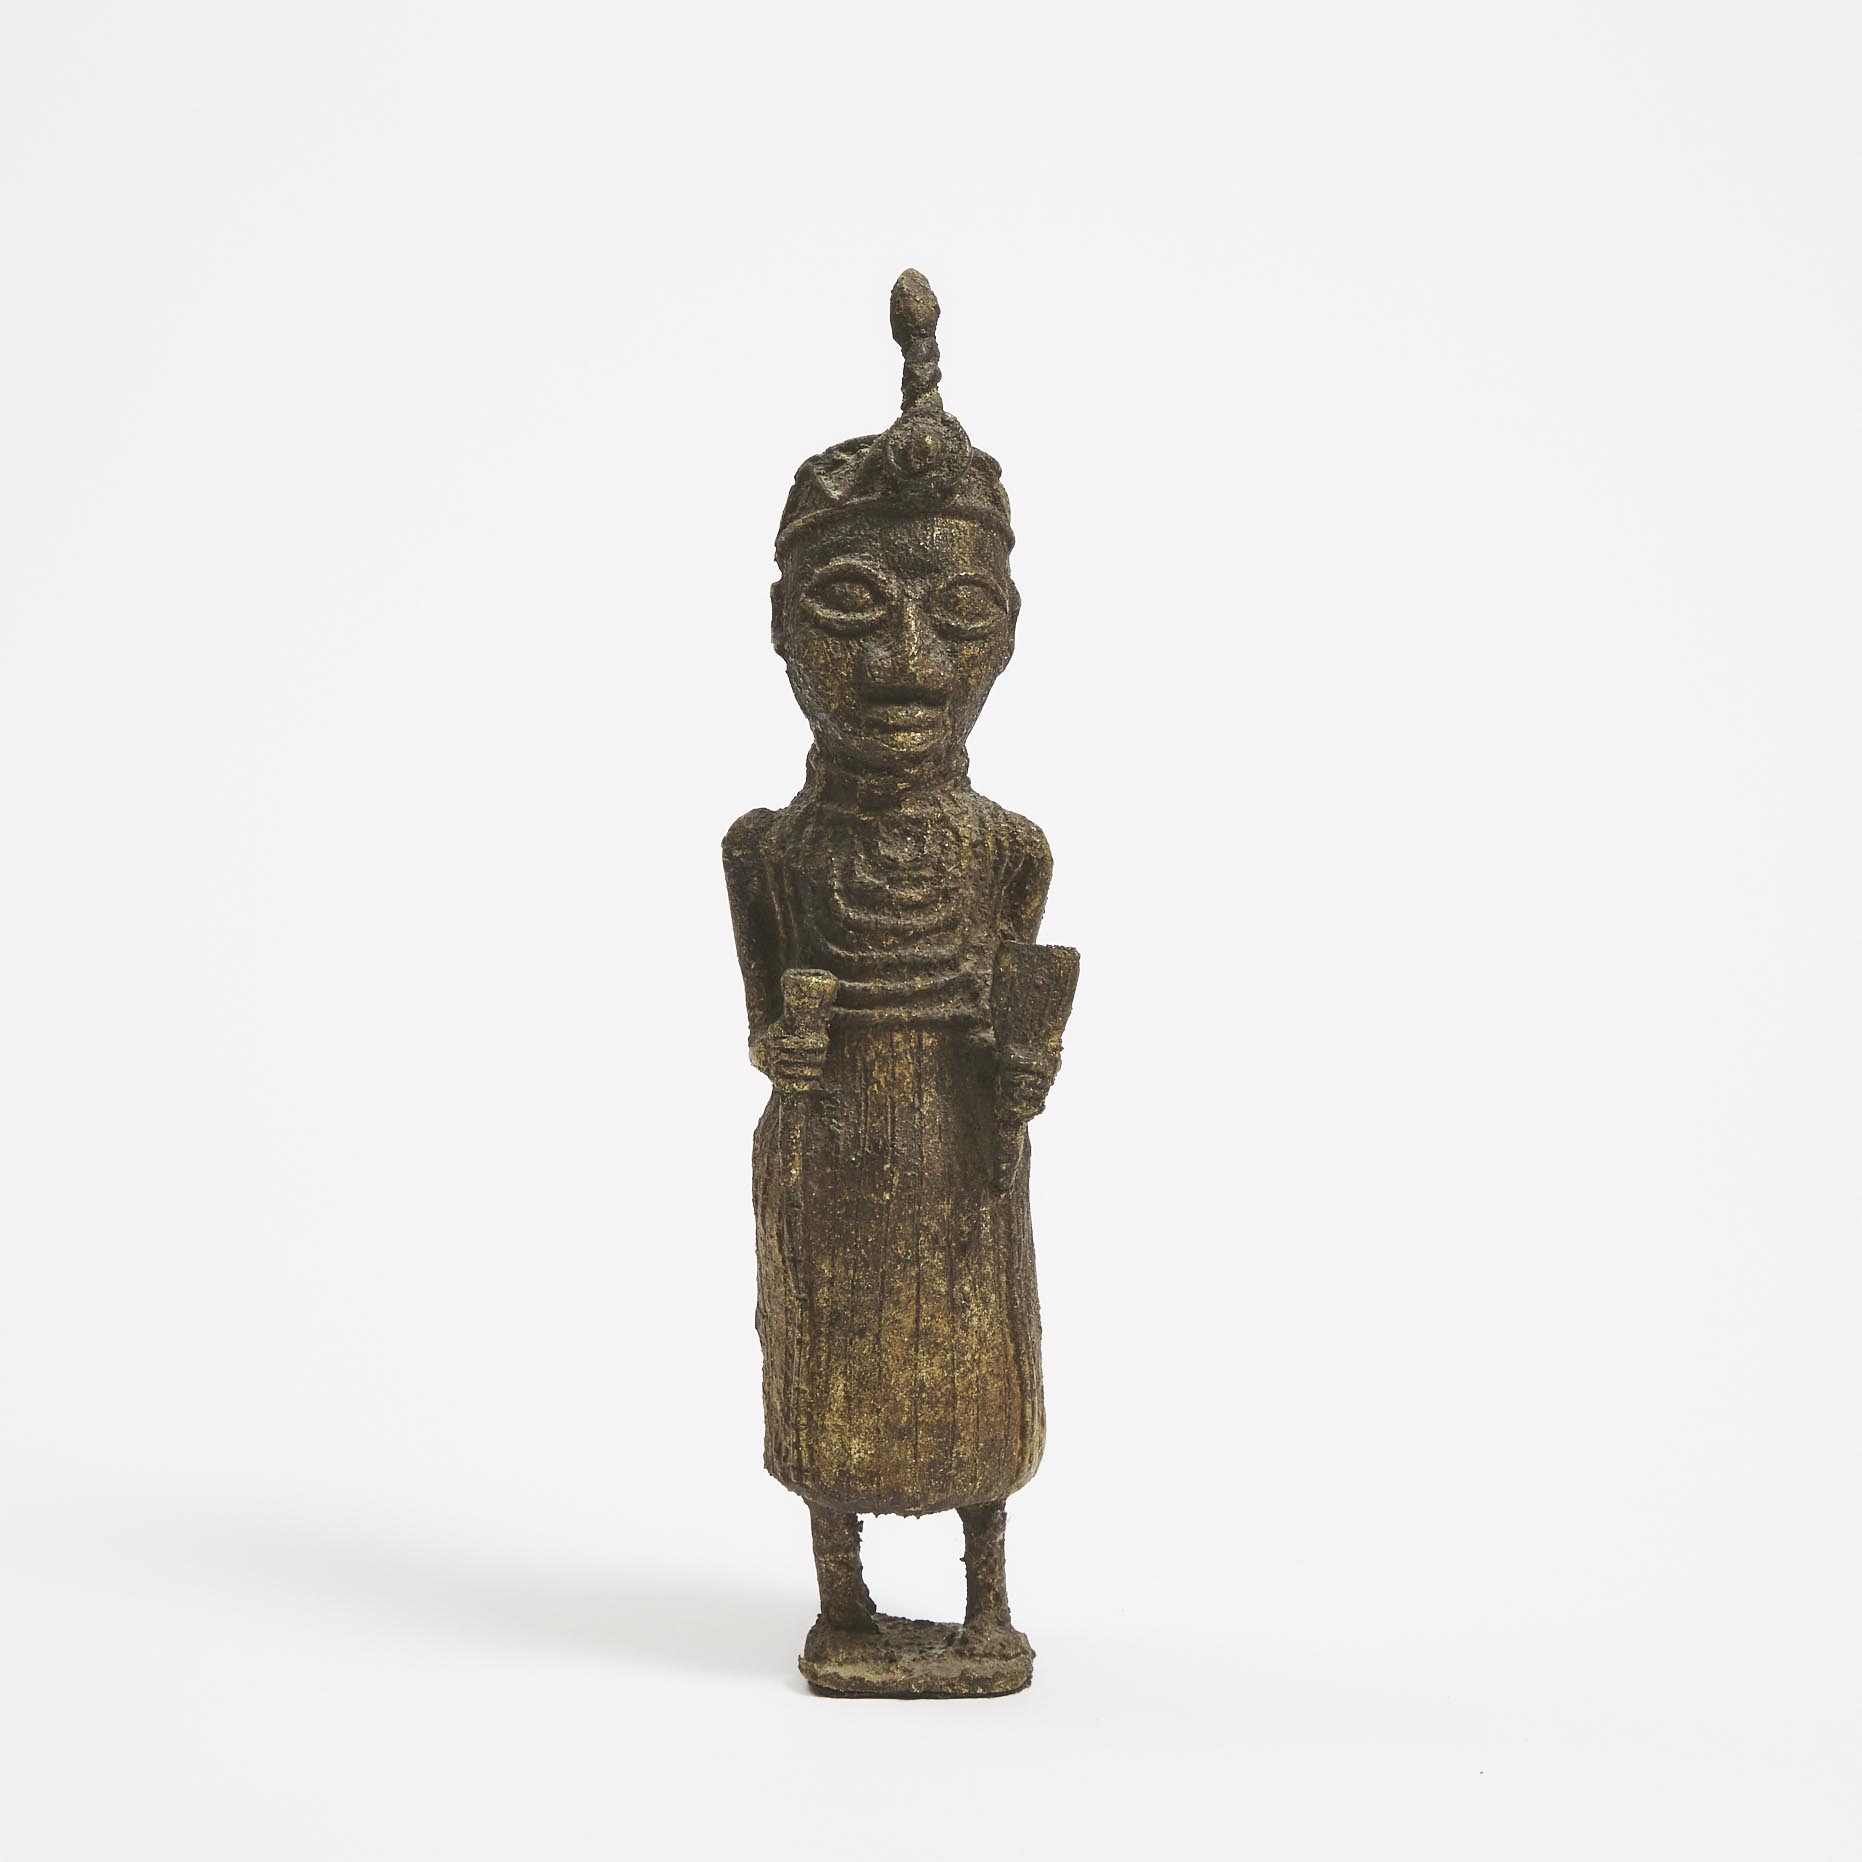 Benin Bronze Figure, Nigeria, West Africa, 20th century